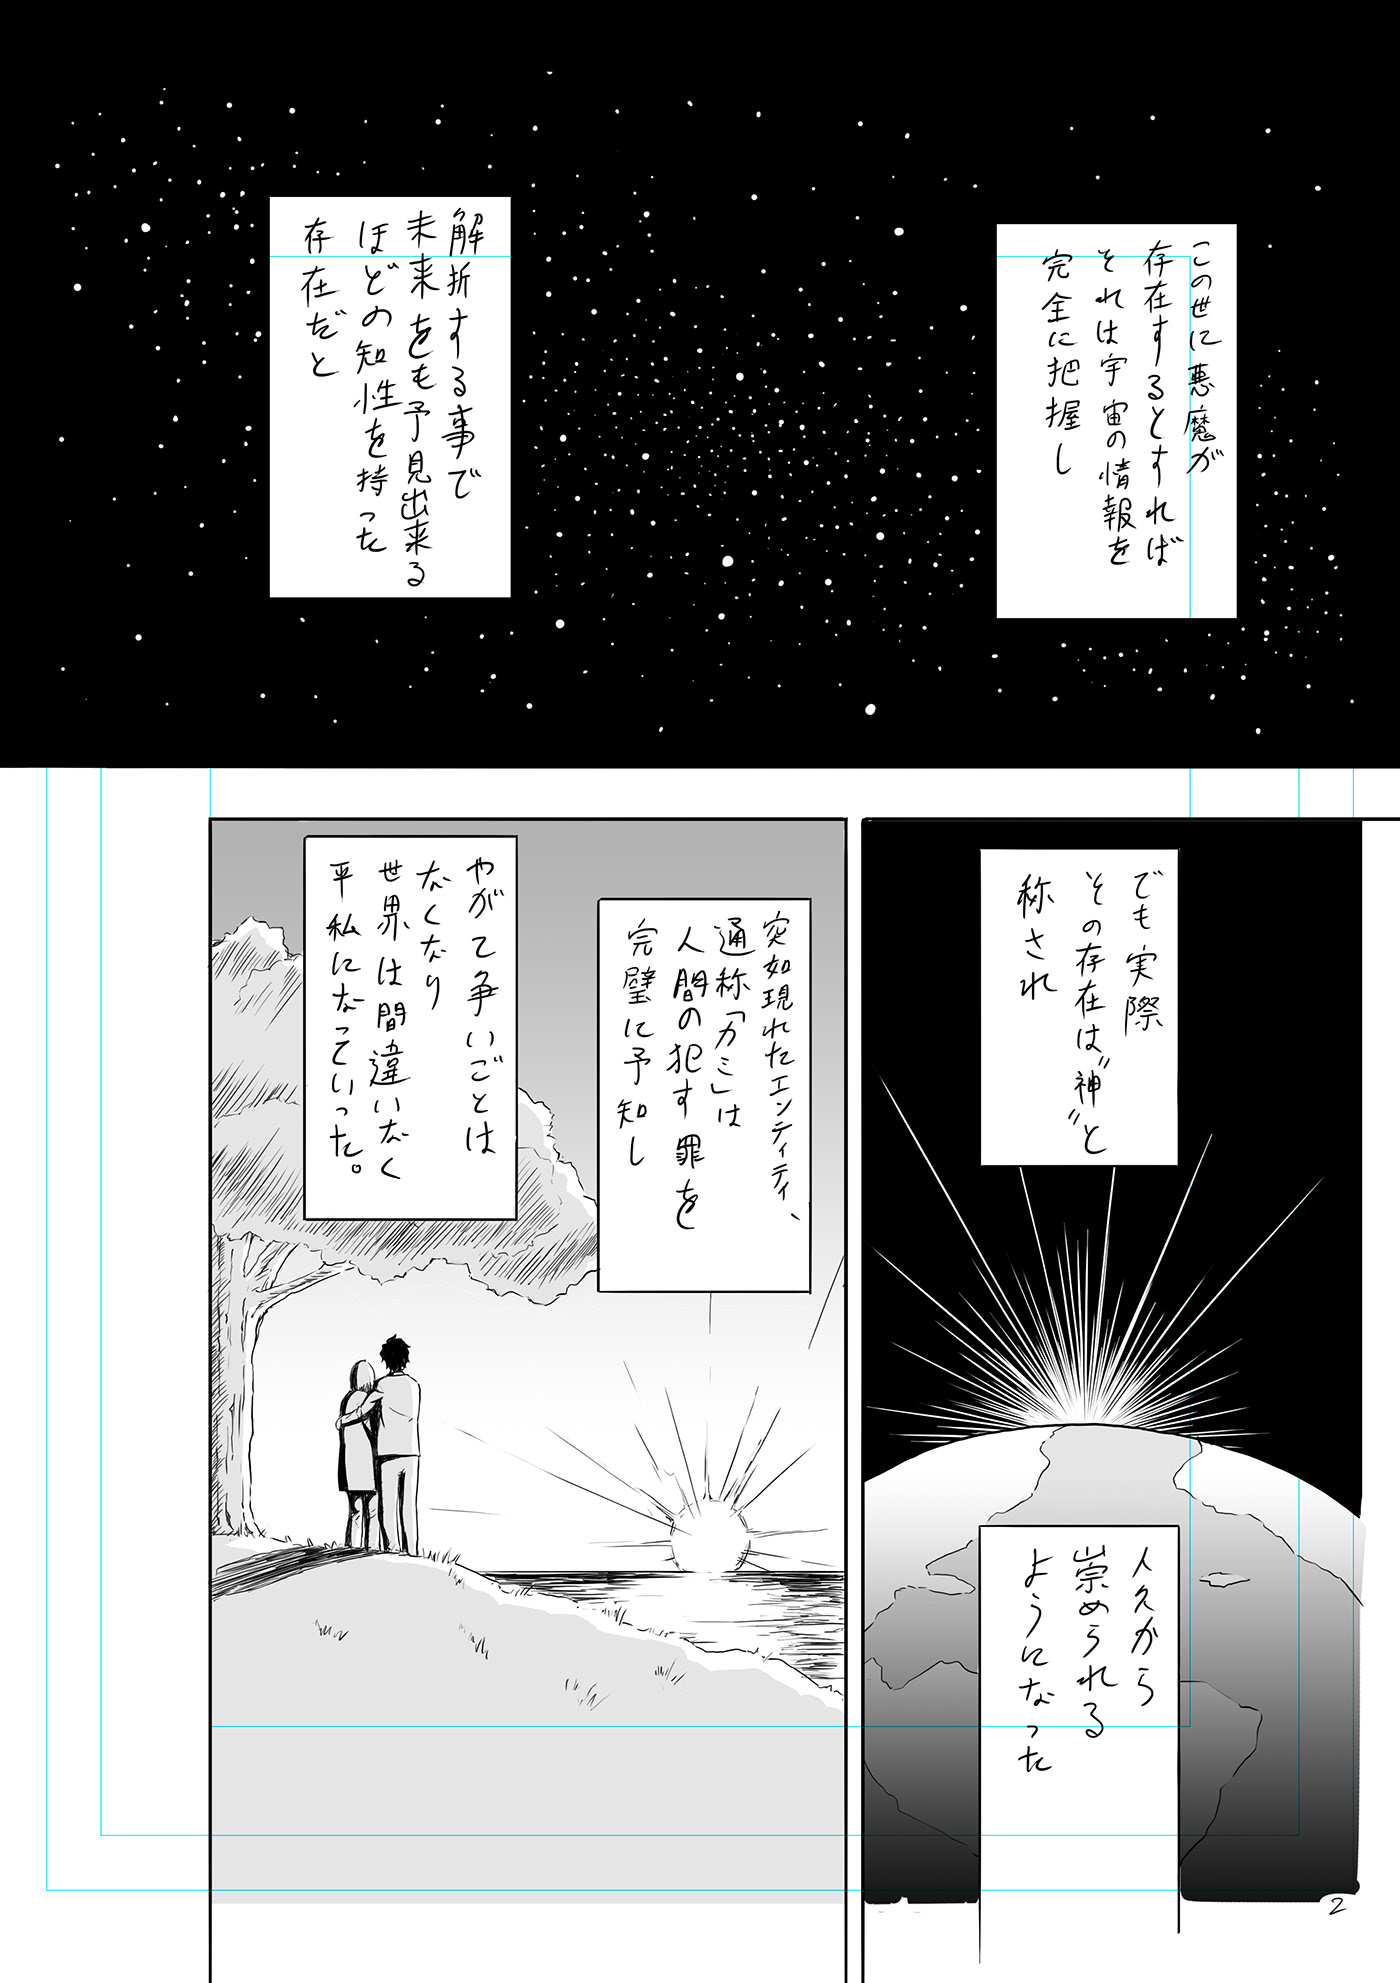 manga anime cartoon japanese story